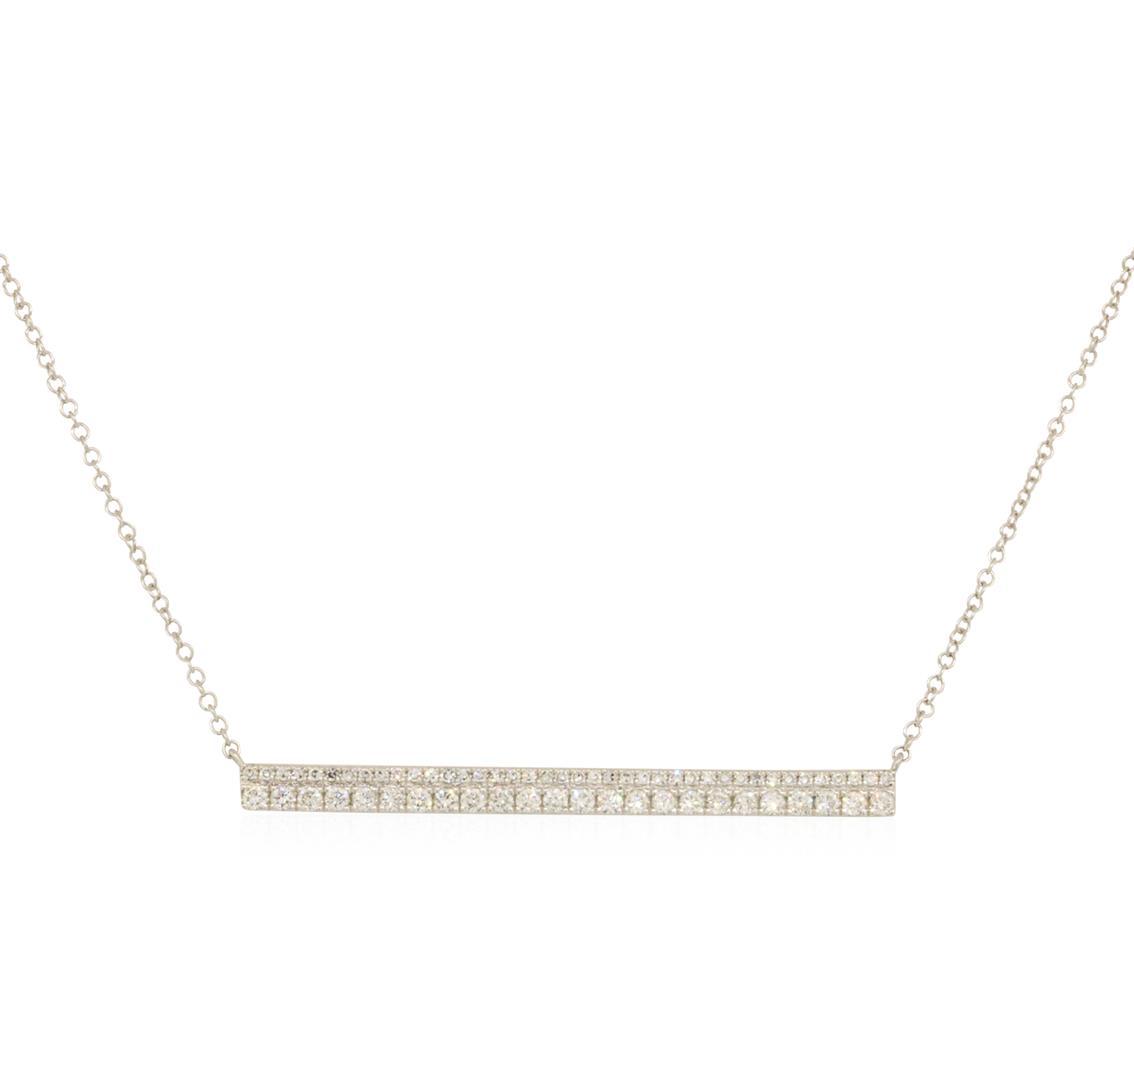 0.3 ctw Diamond Necklace - 14KT White Gold